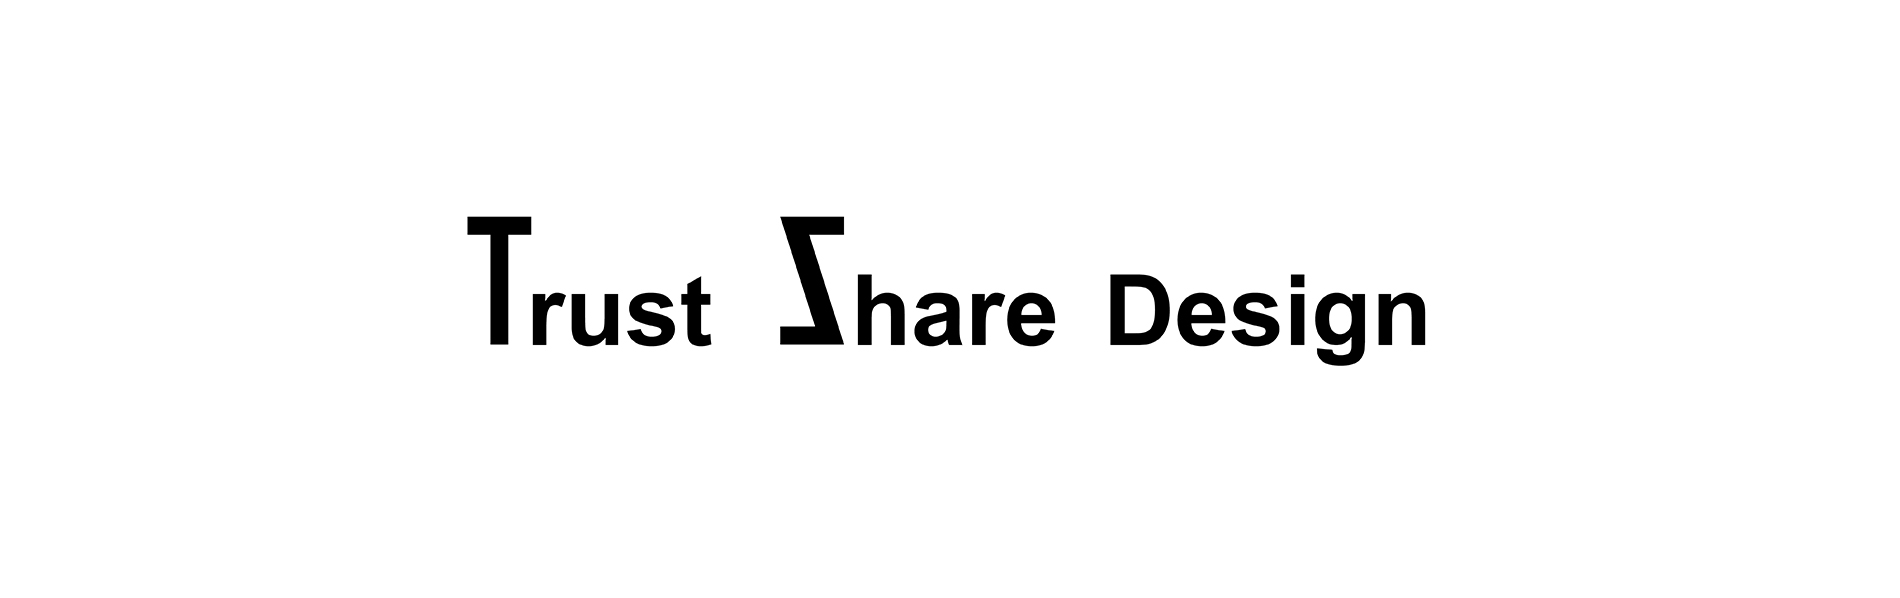 Trust Share Design